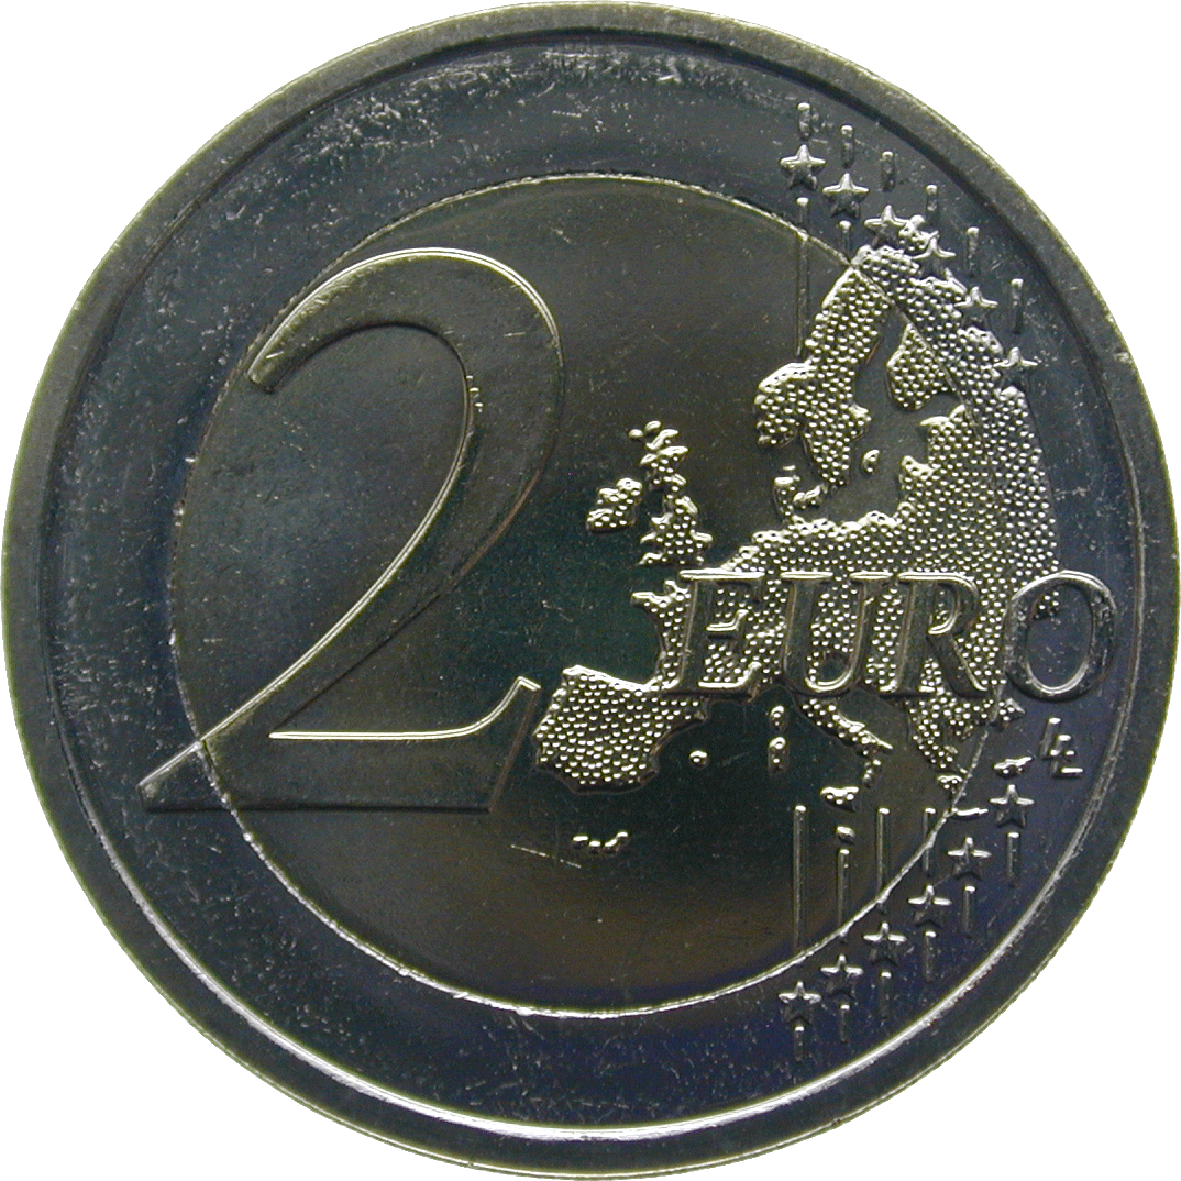 Slovak Republic, 2 Euro 2009 (obverse)